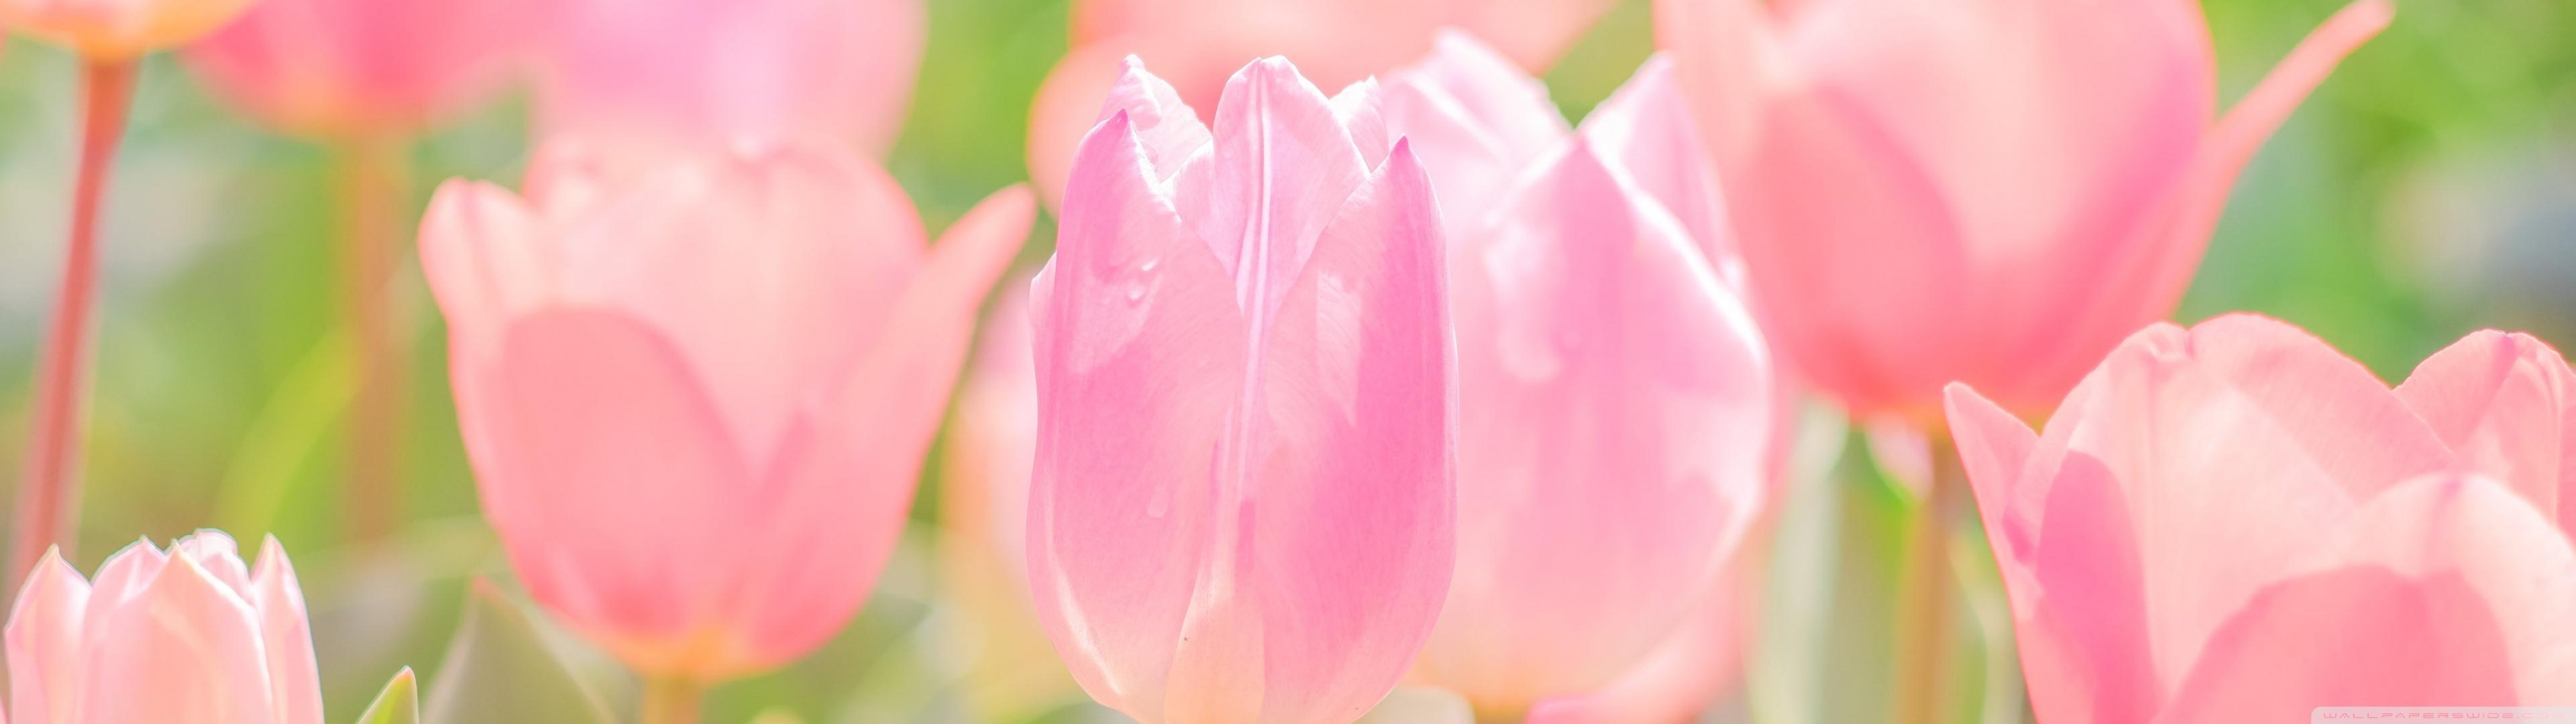 Pink Spring Flowers Ultra HD Desktop Background Wallpaper For